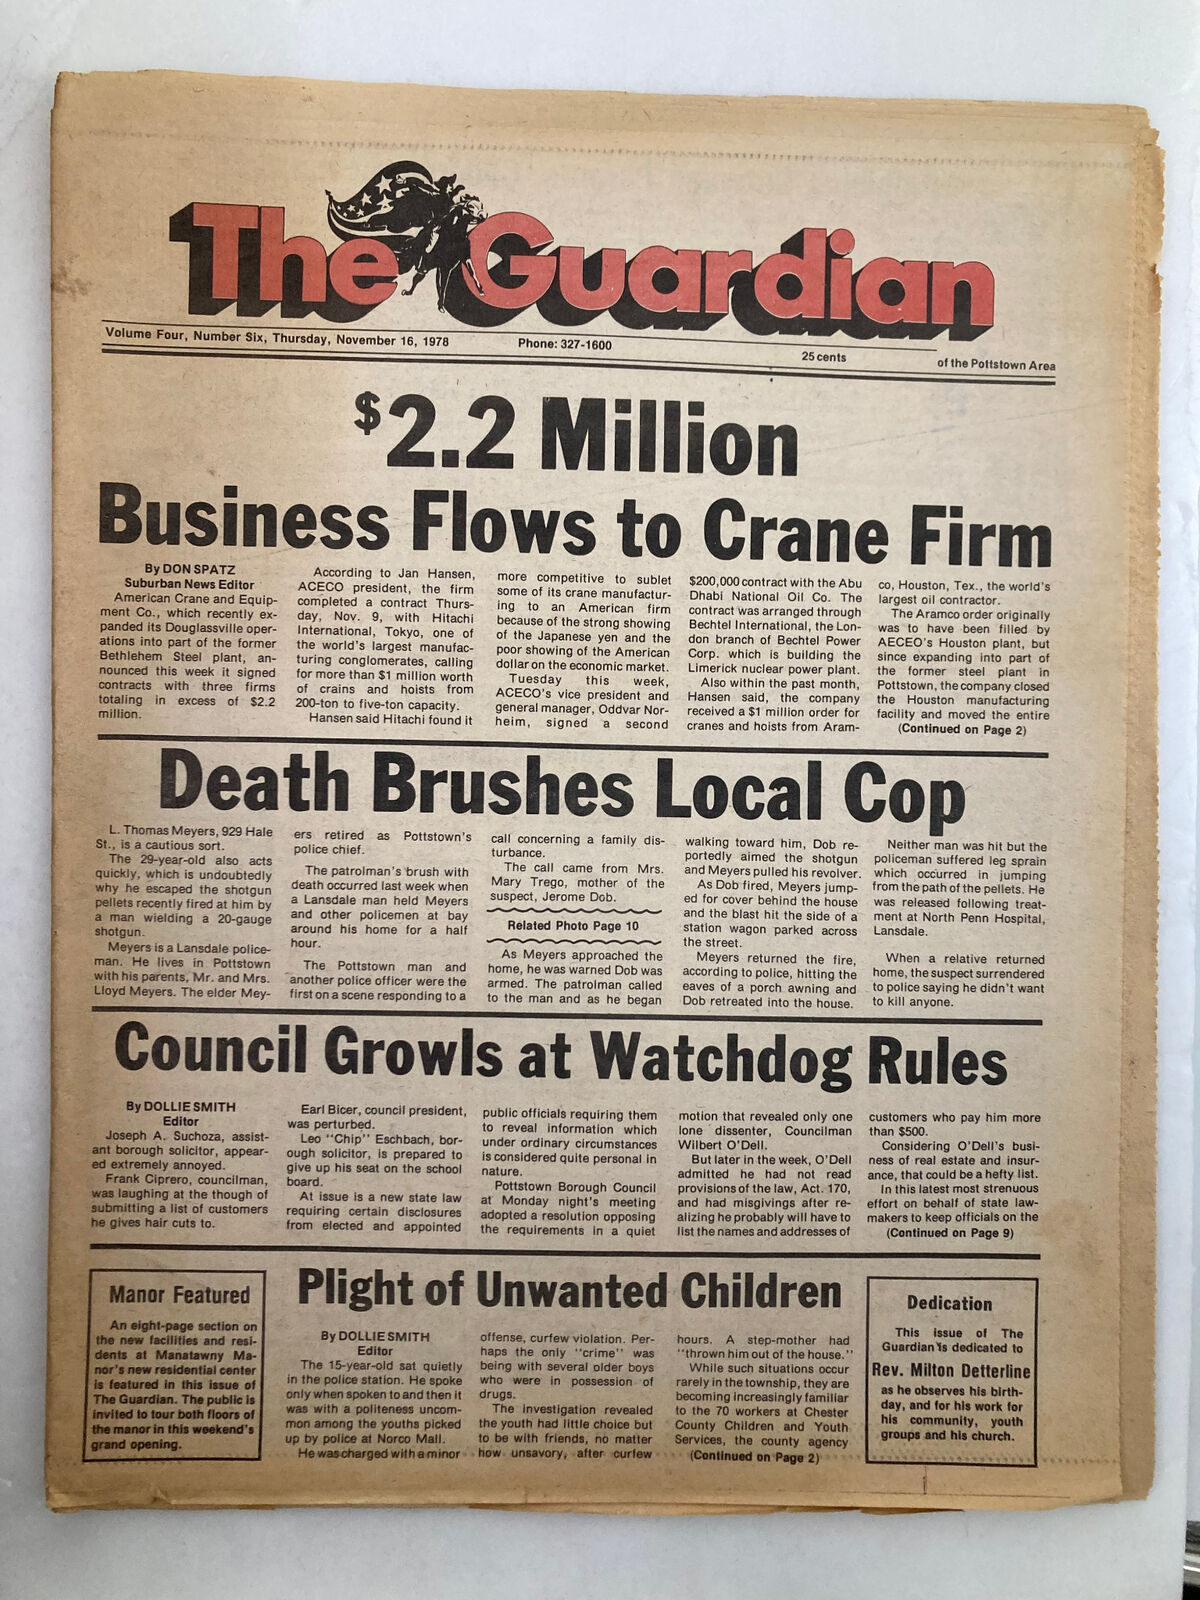 The Guardian Newspaper November 16 1978 Vol 4 #6 Death Brushes Local Cop